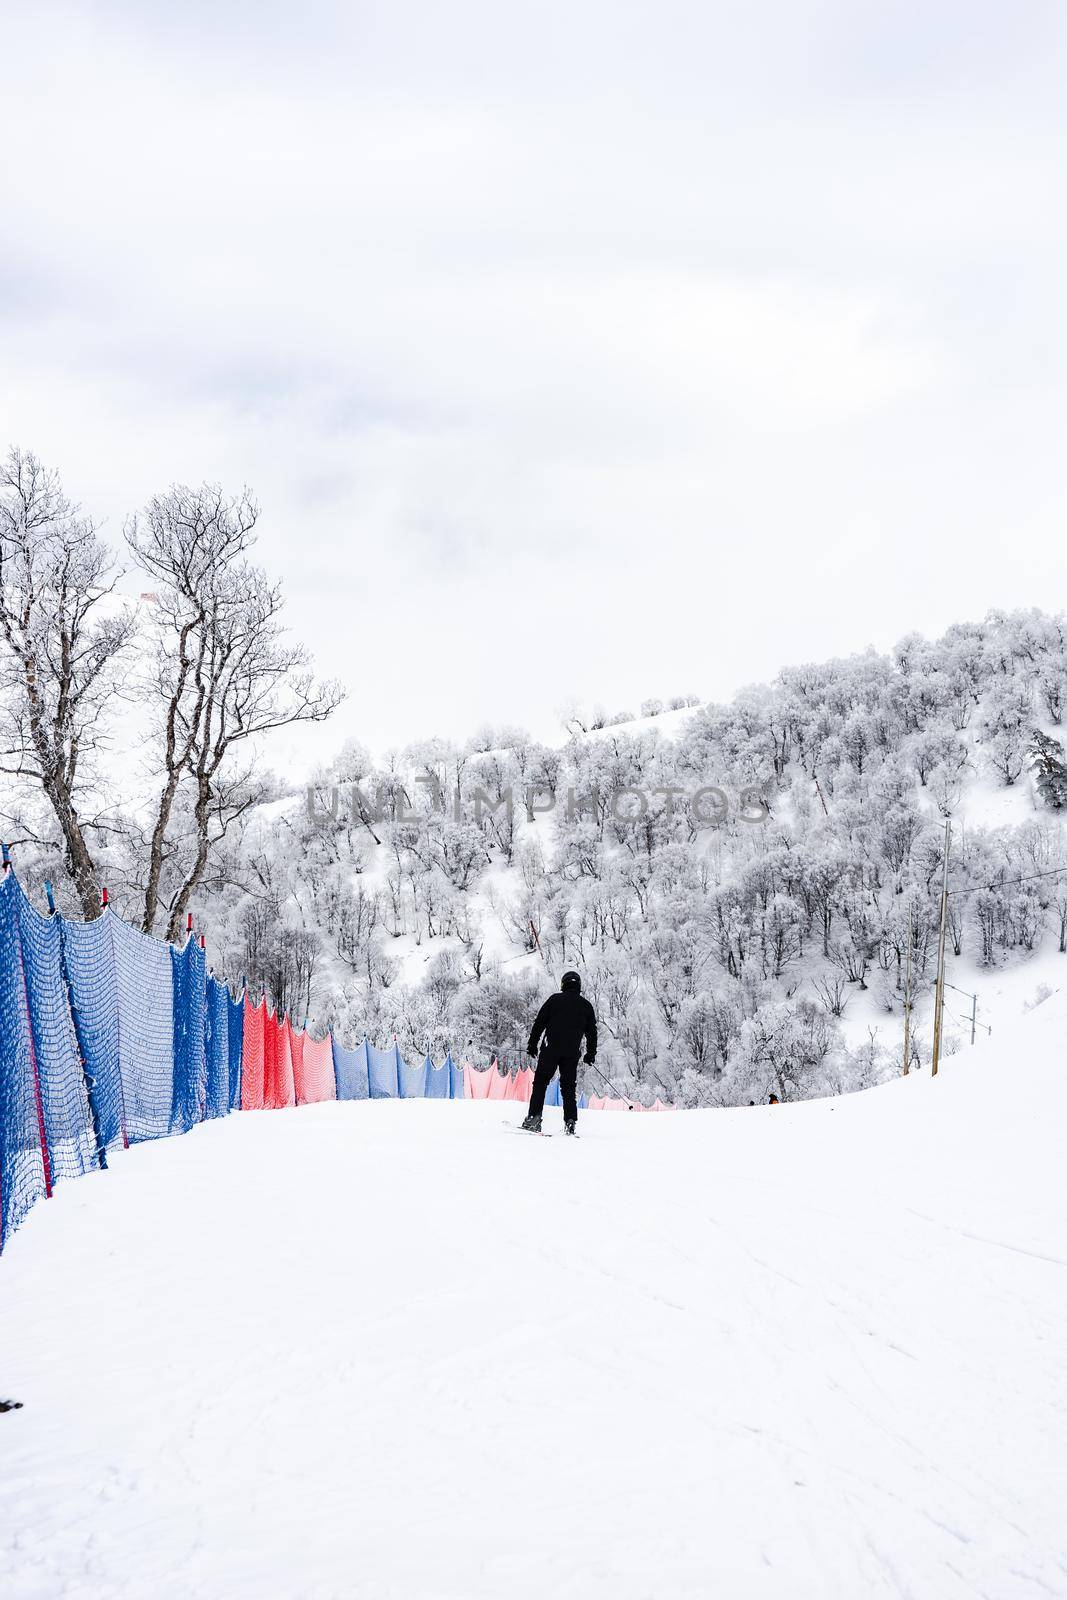 Blue safety web on ski road in Bakuriani skiing resort in Georgia